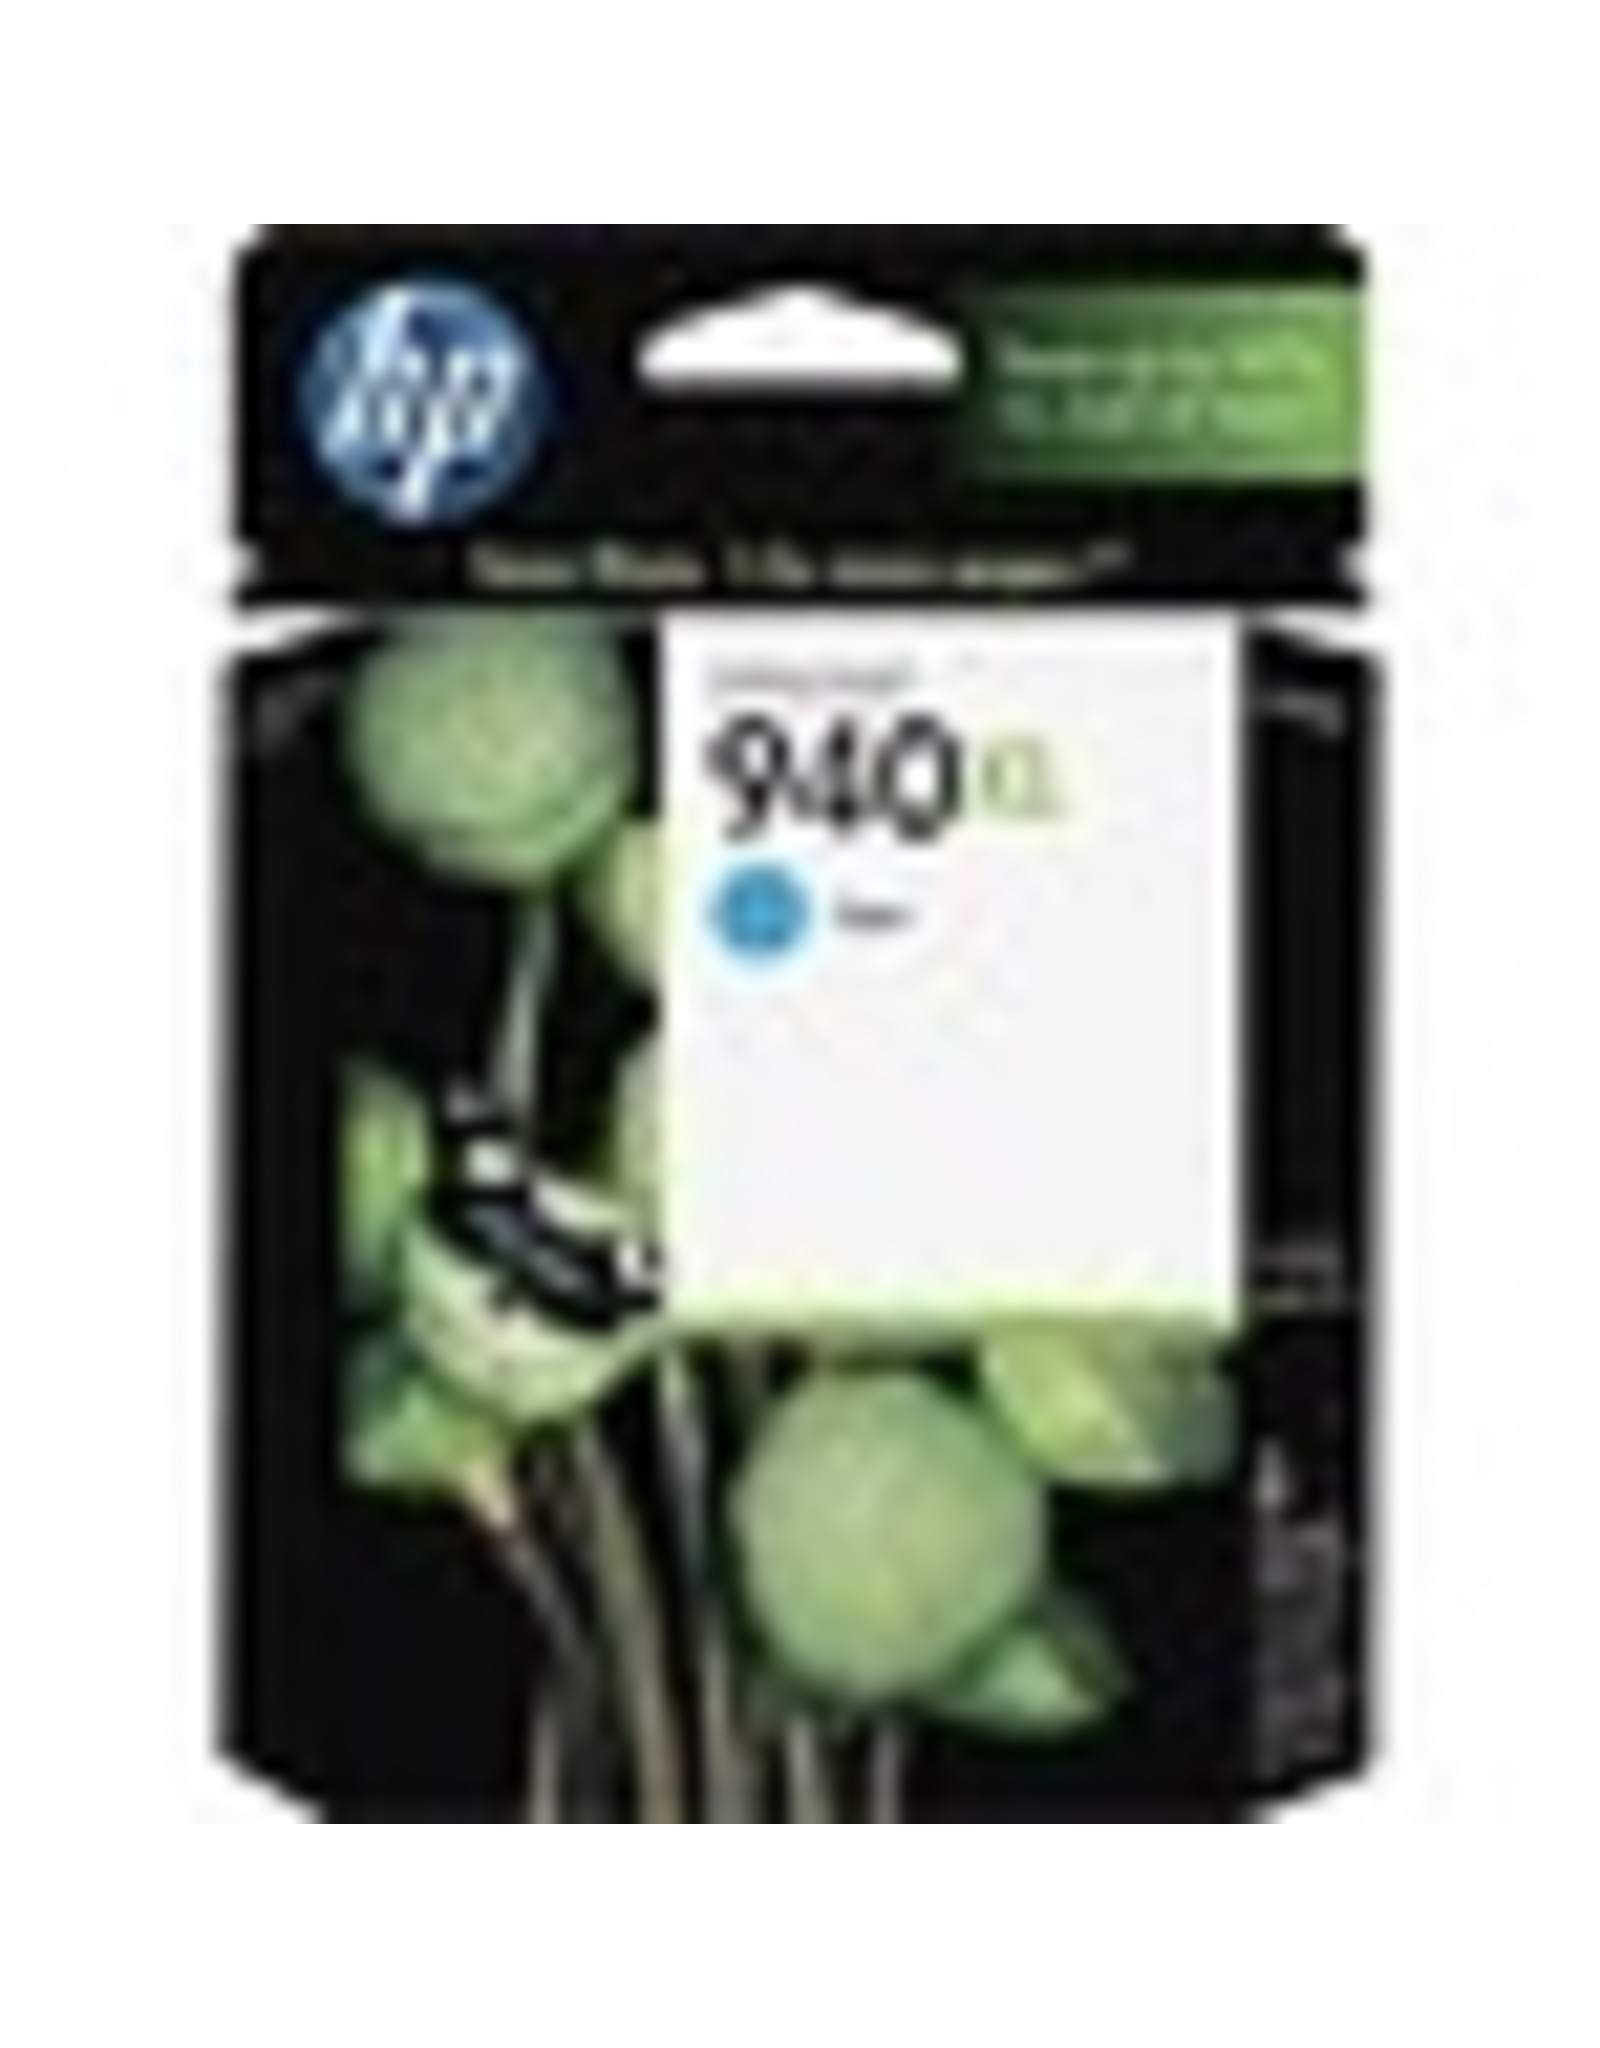 HP HP 940XL (C4907AN#140) Cyan Original Ink Cartridge - Single Pack